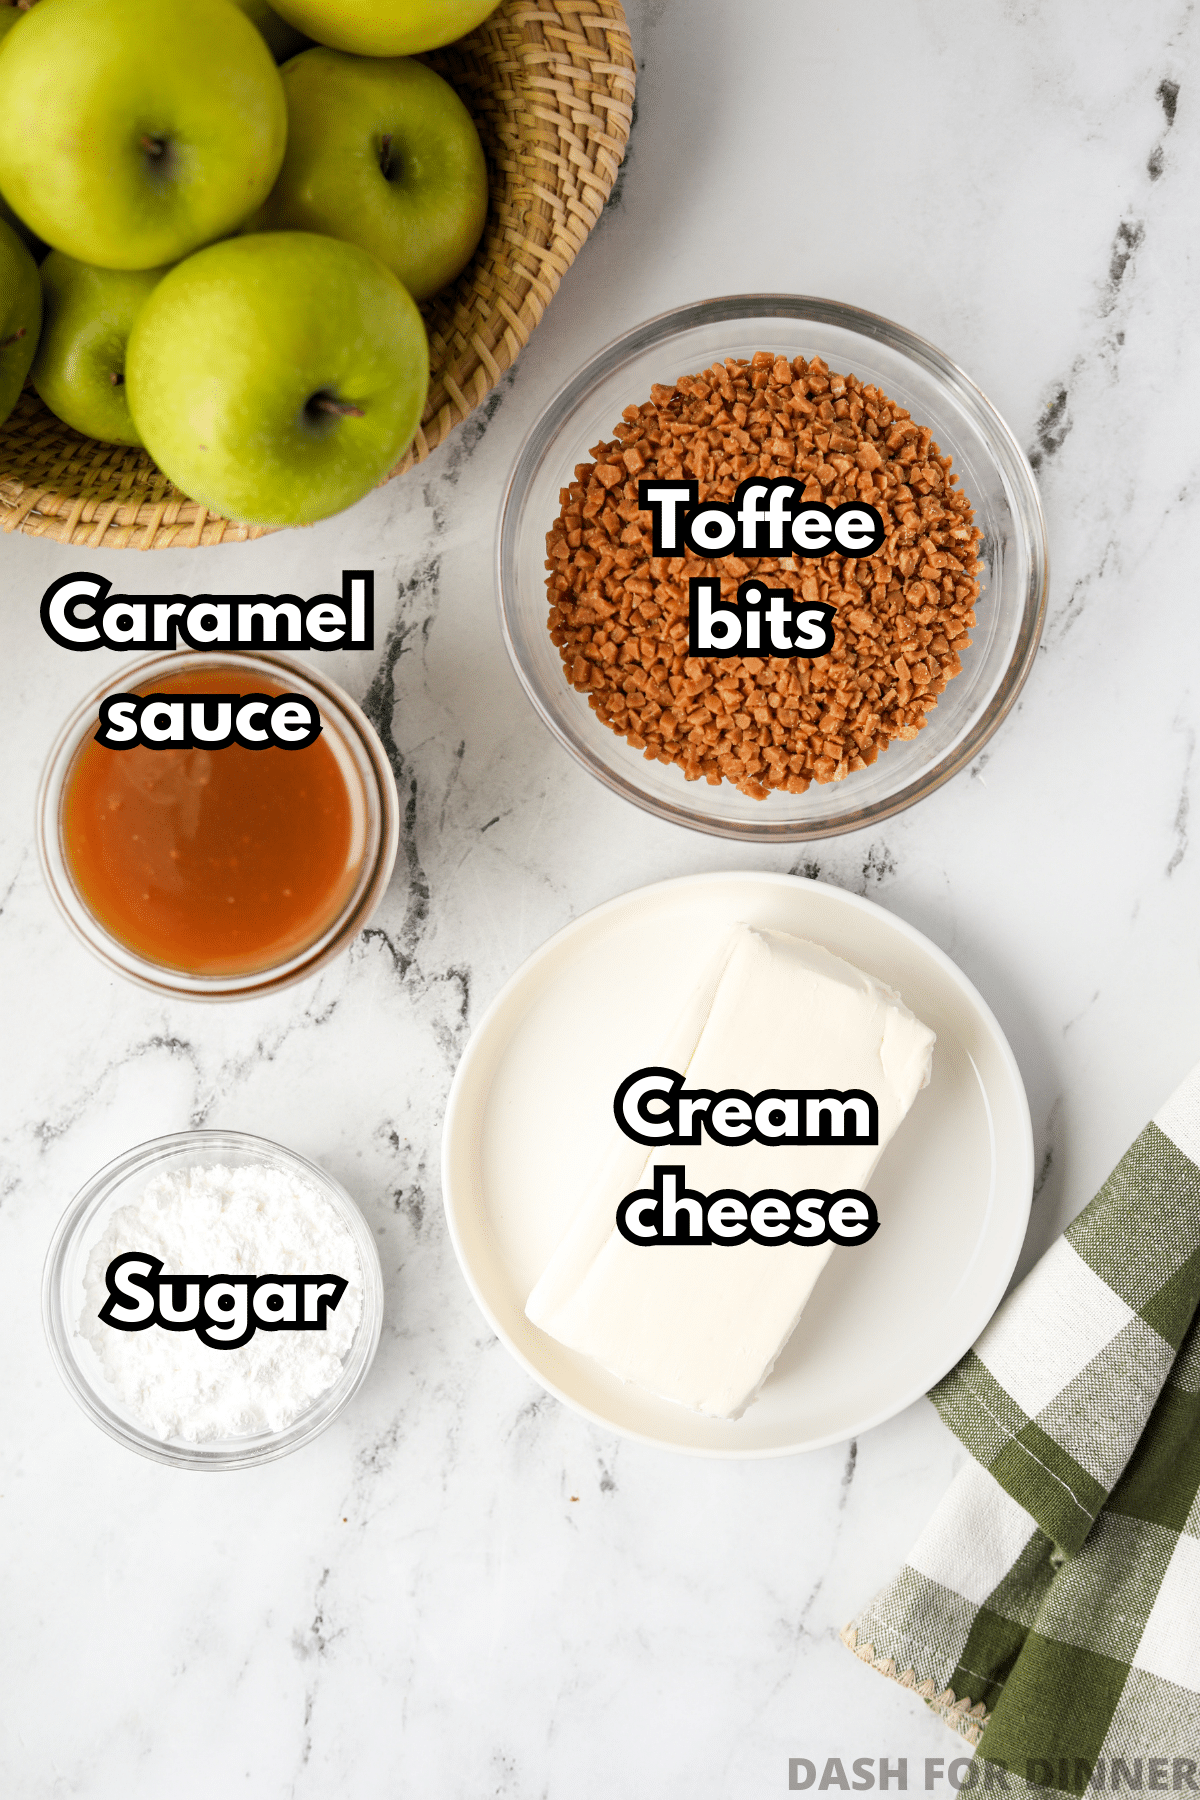 The ingredients needed to make caramel apple dip: caramel, cream cheese, toffee bits, sugar.